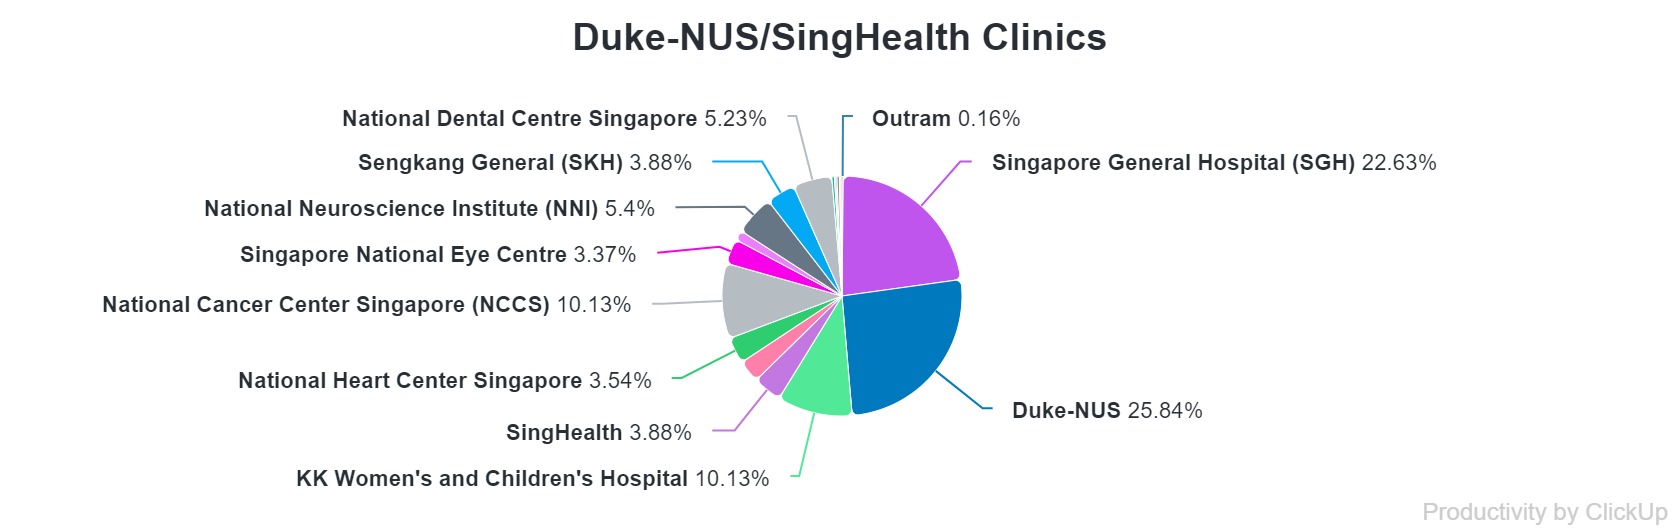 SingHealth/NUS clinics